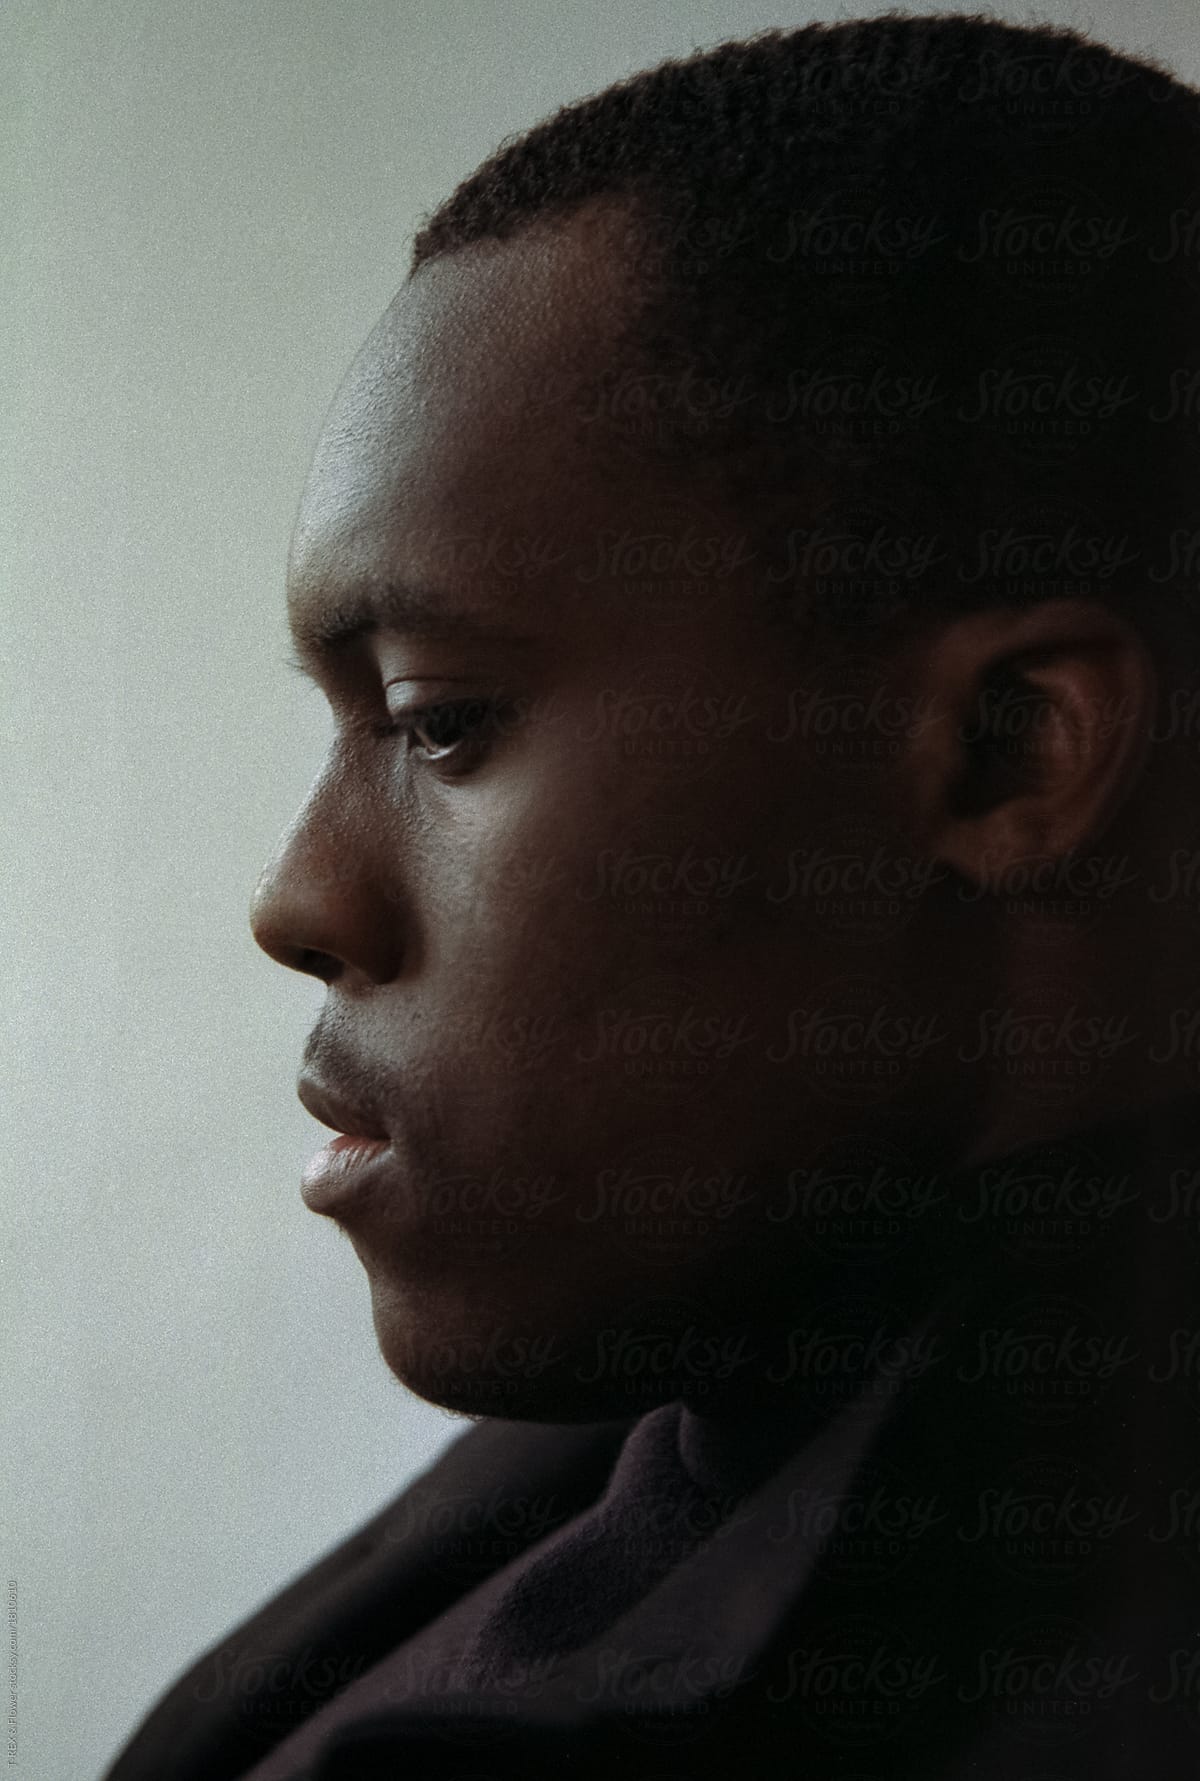 Profile of black serious man